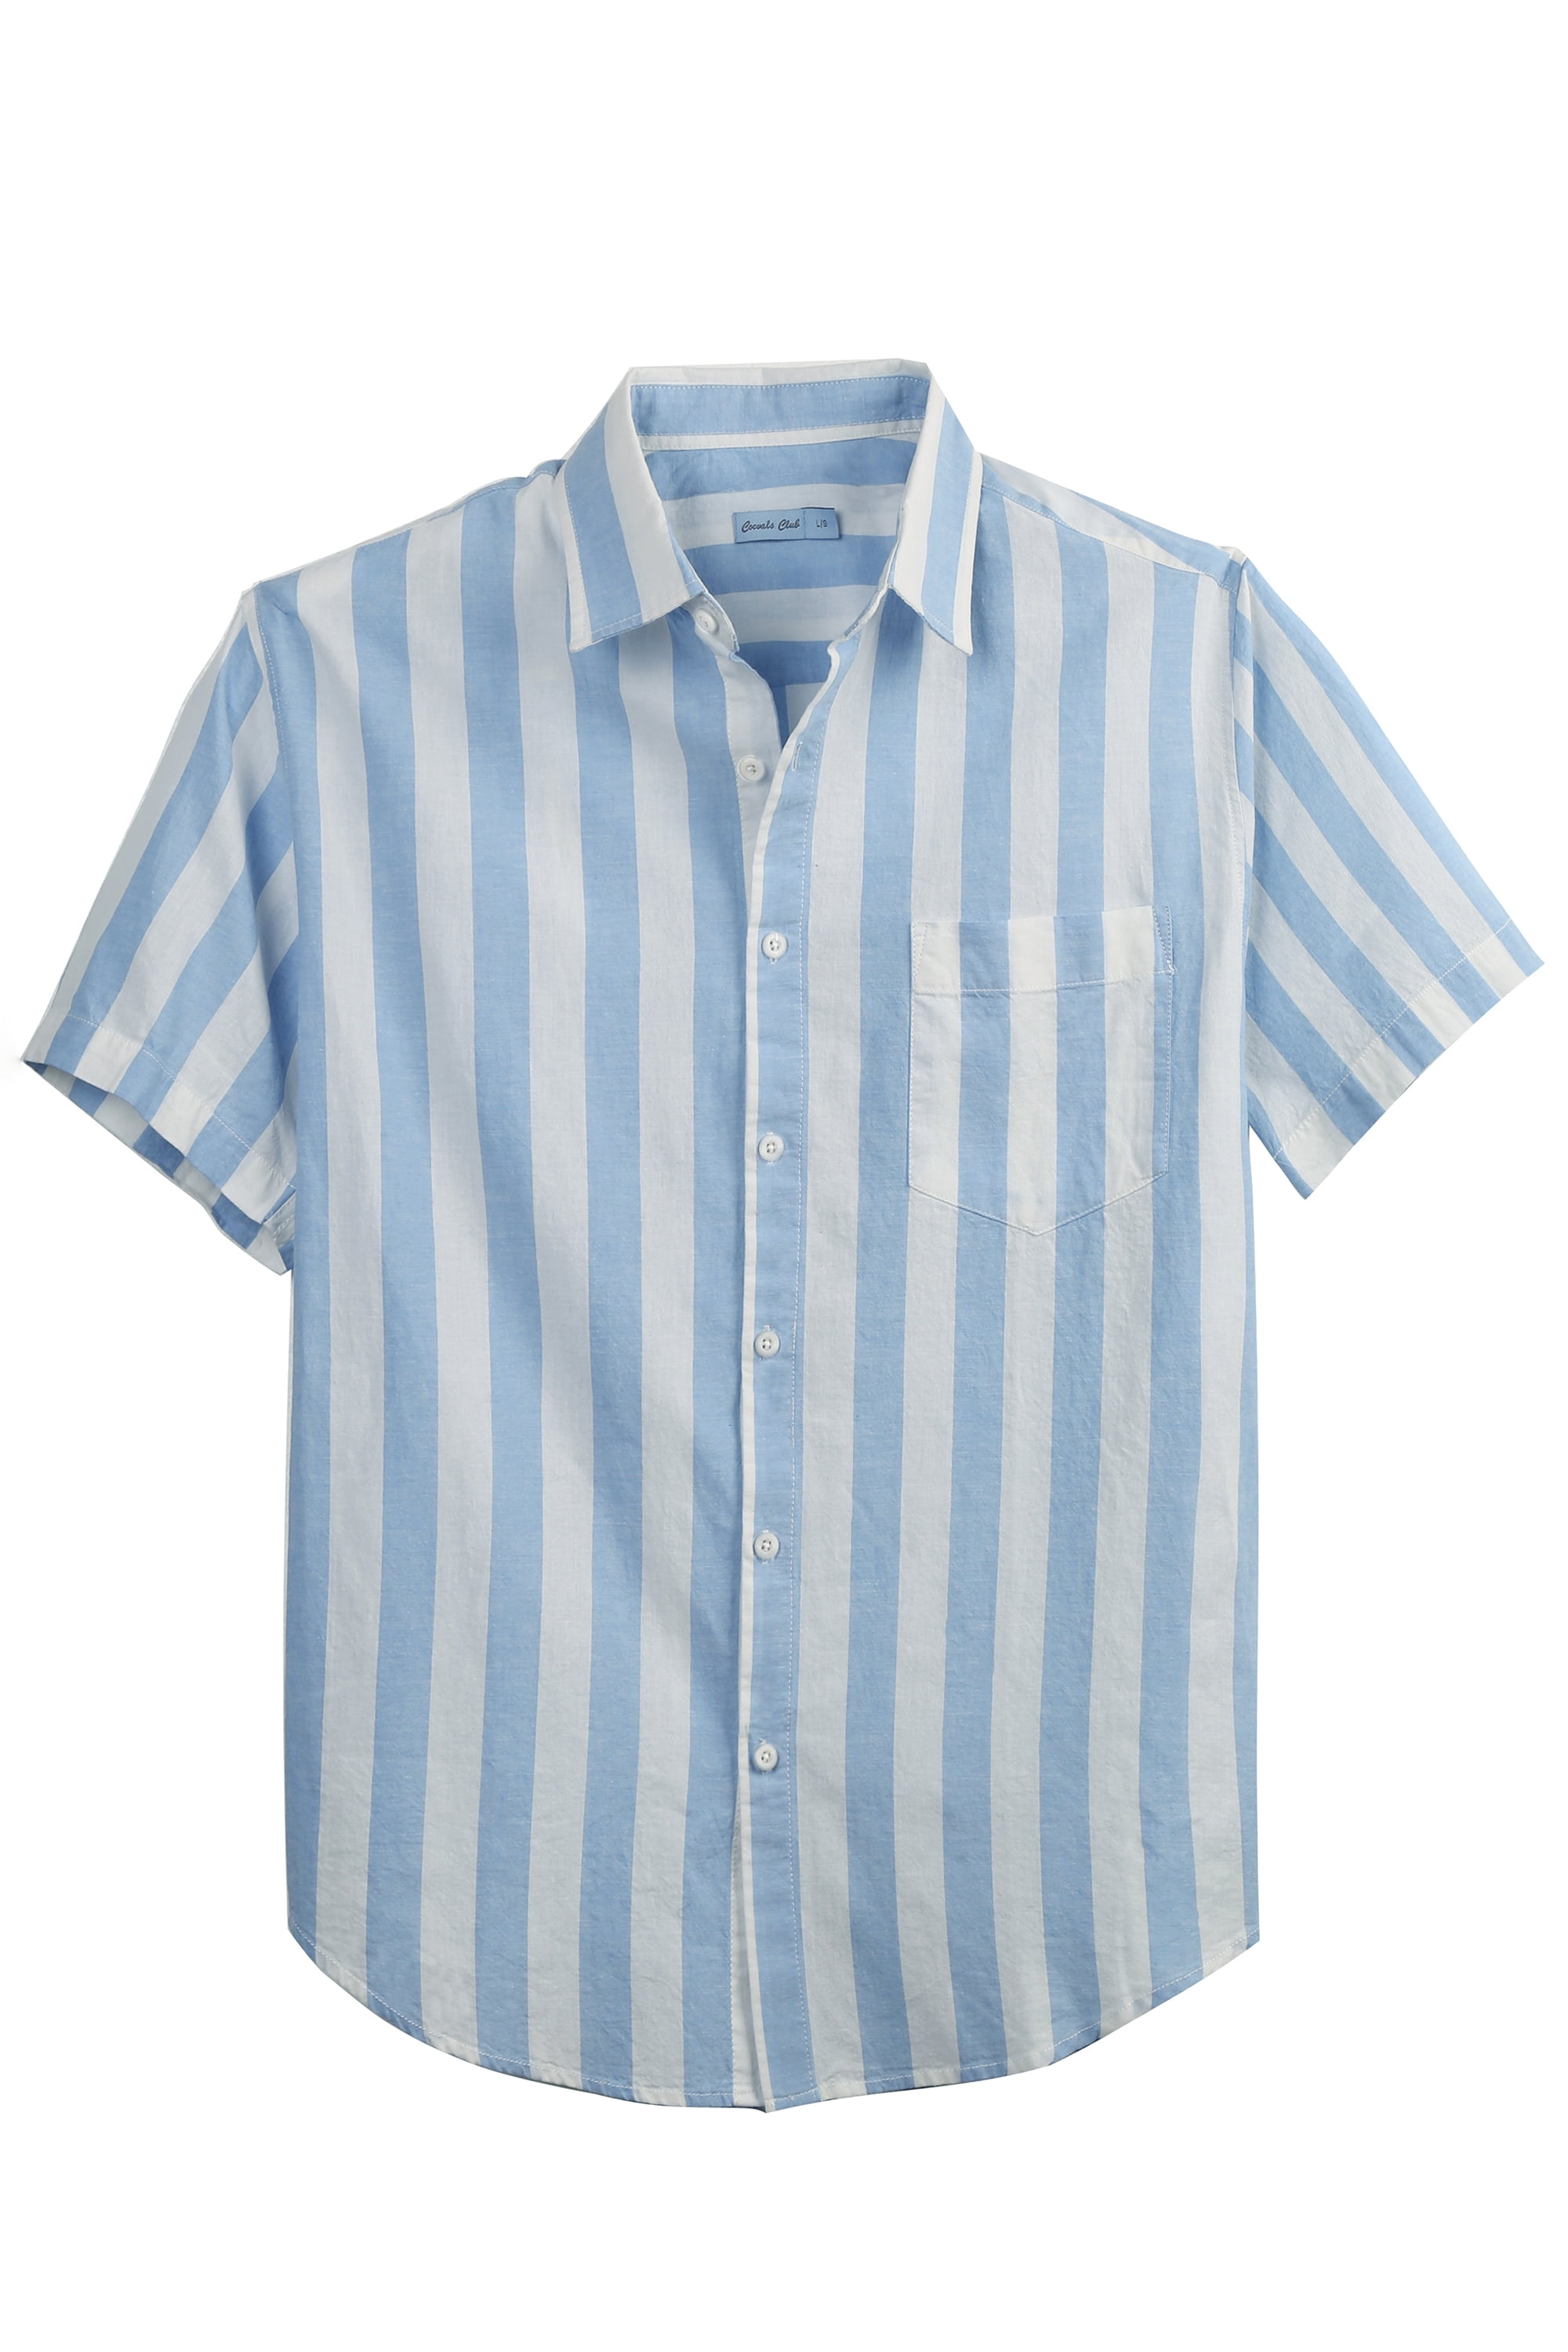 COEVALS CLUB Men’s Linen Beach Summer Casual Button Down Shirt Solid ...